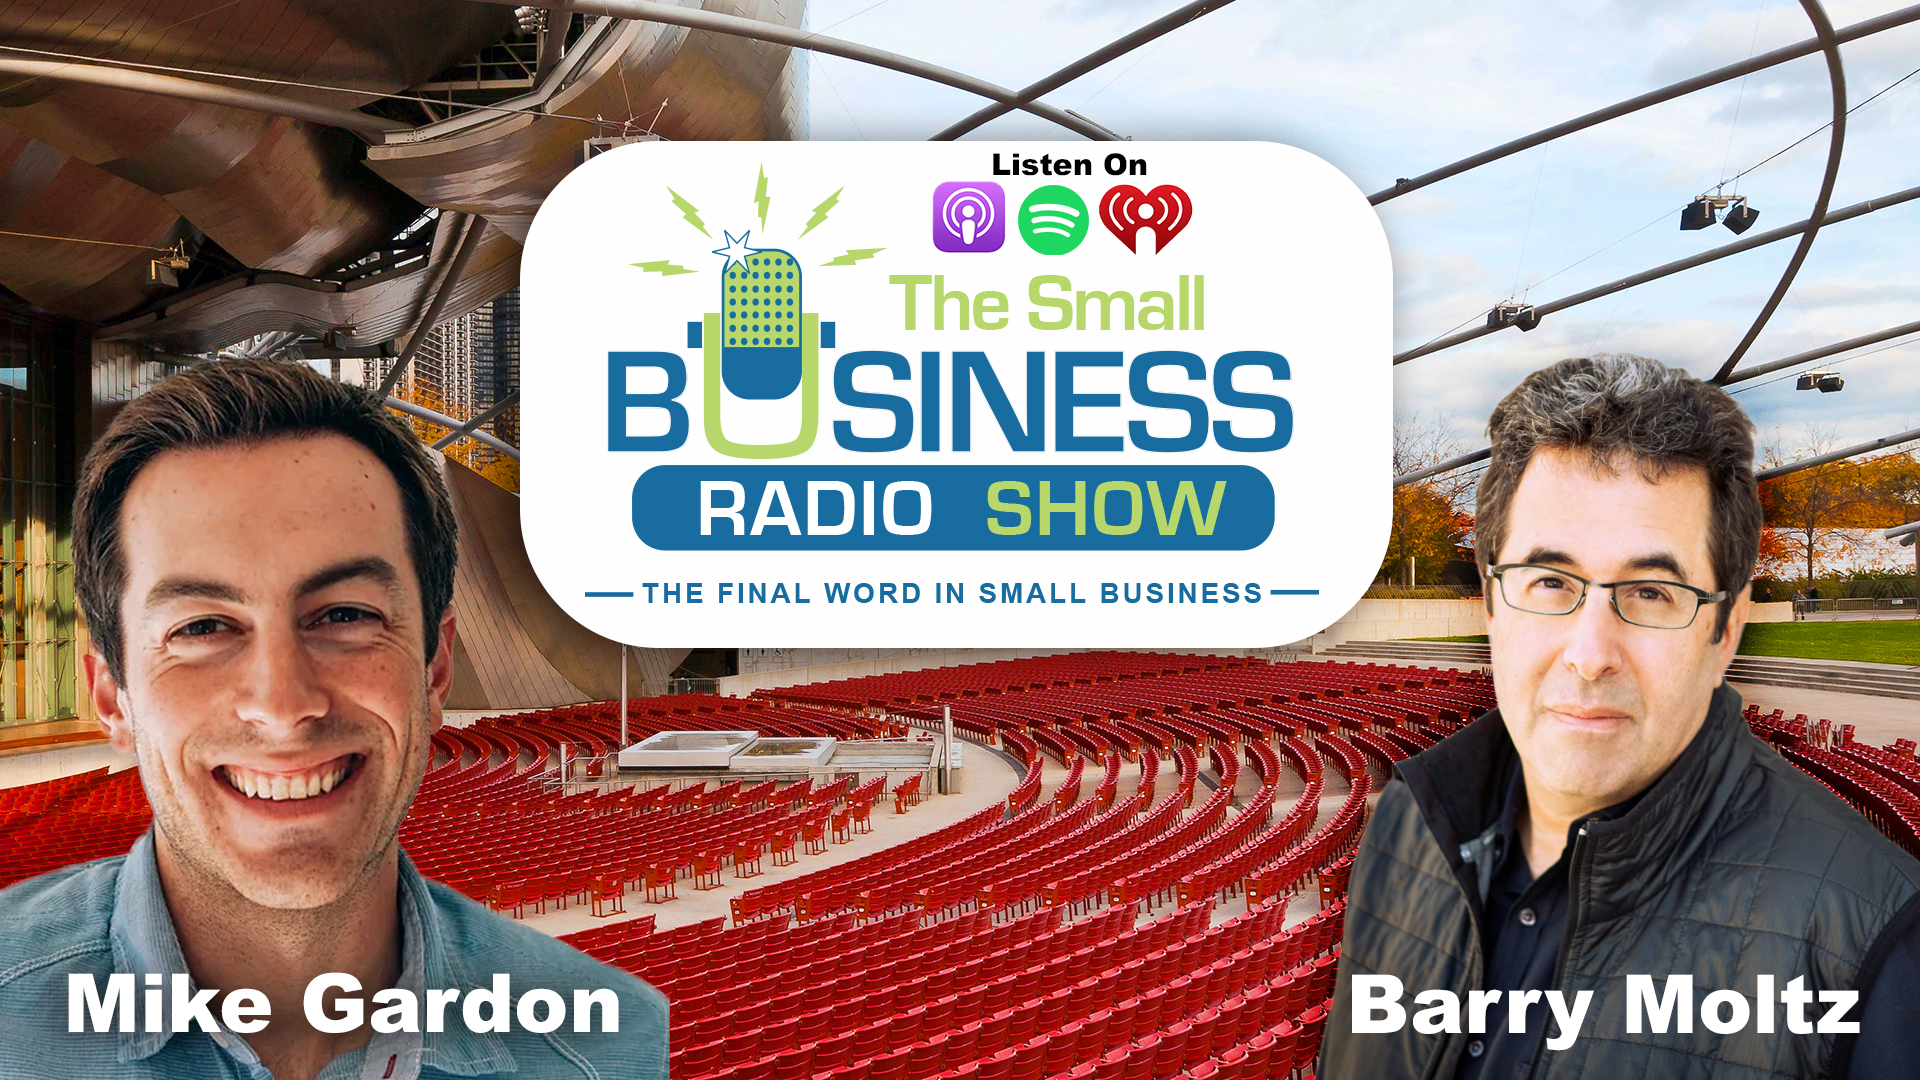 Mike Gardon on The Small Business Radio Show